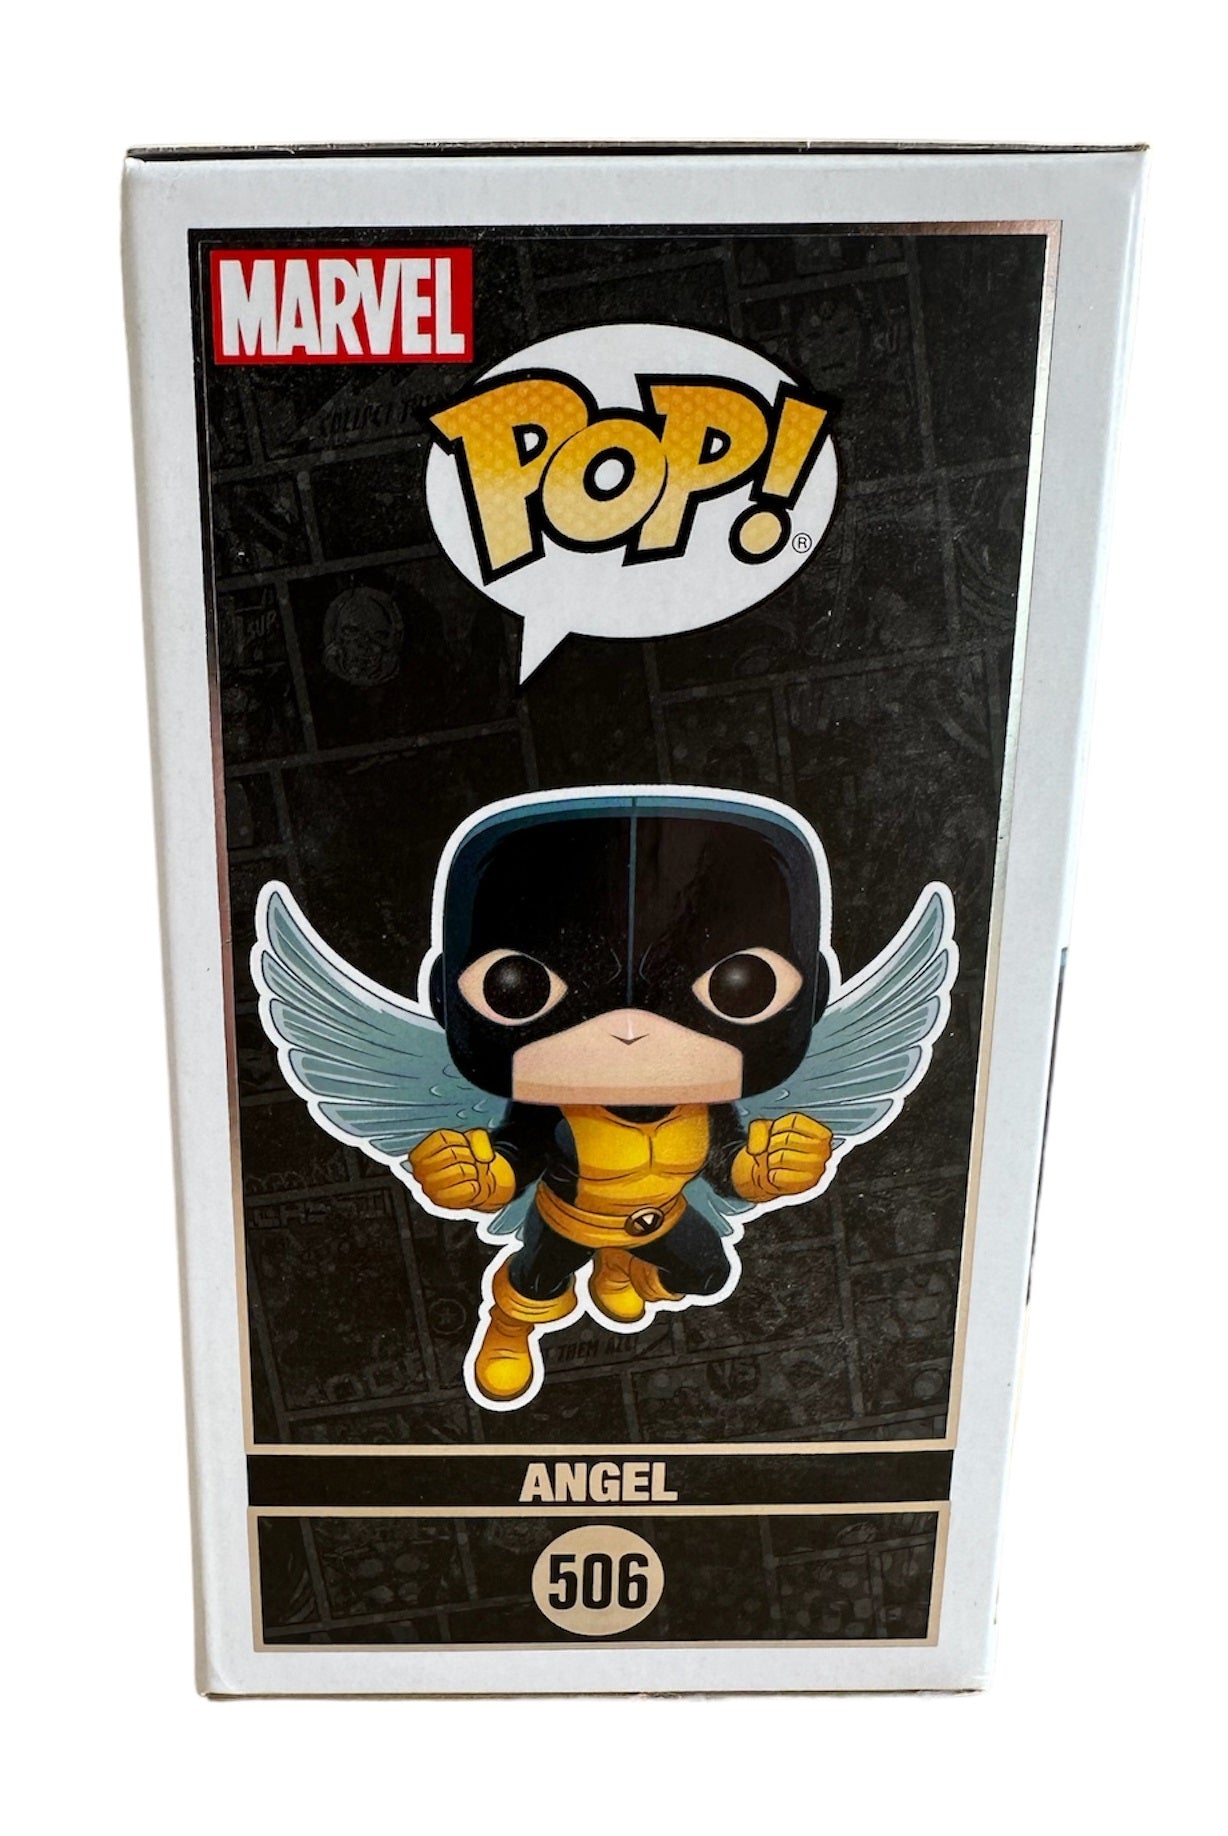 POP! 2019 Marvels 80 Years First Appearance Funko Pop Vinyl Figure - Angel Bobble-Head No. 506 - Brand New Shop Stock Room Find